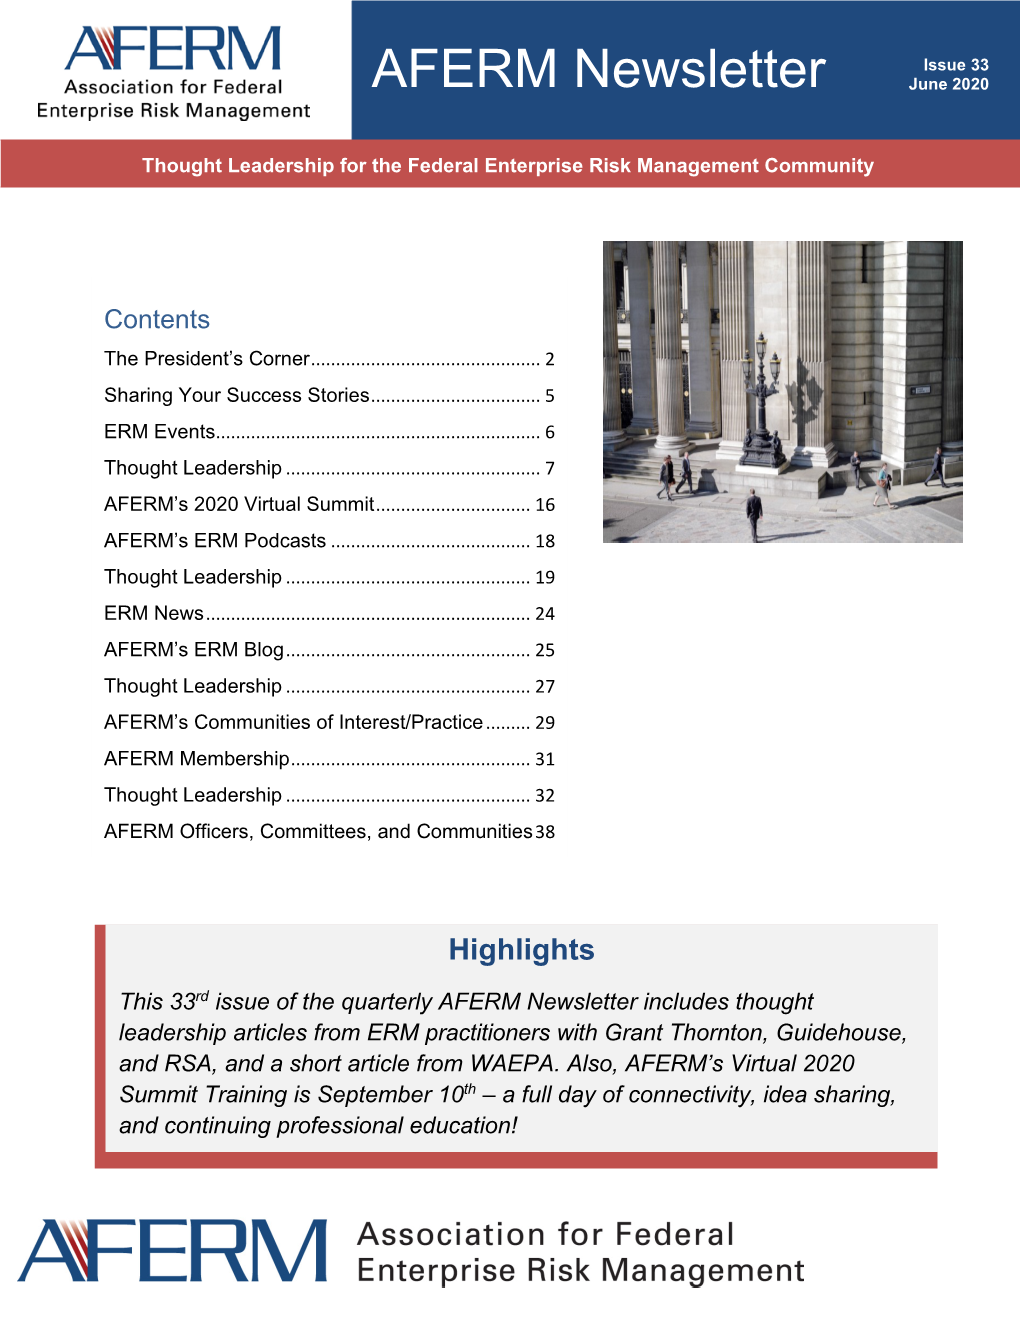 AFERM Newsletter June 2020 Thought Leadership for the Federal Enterprise Risk Management Community